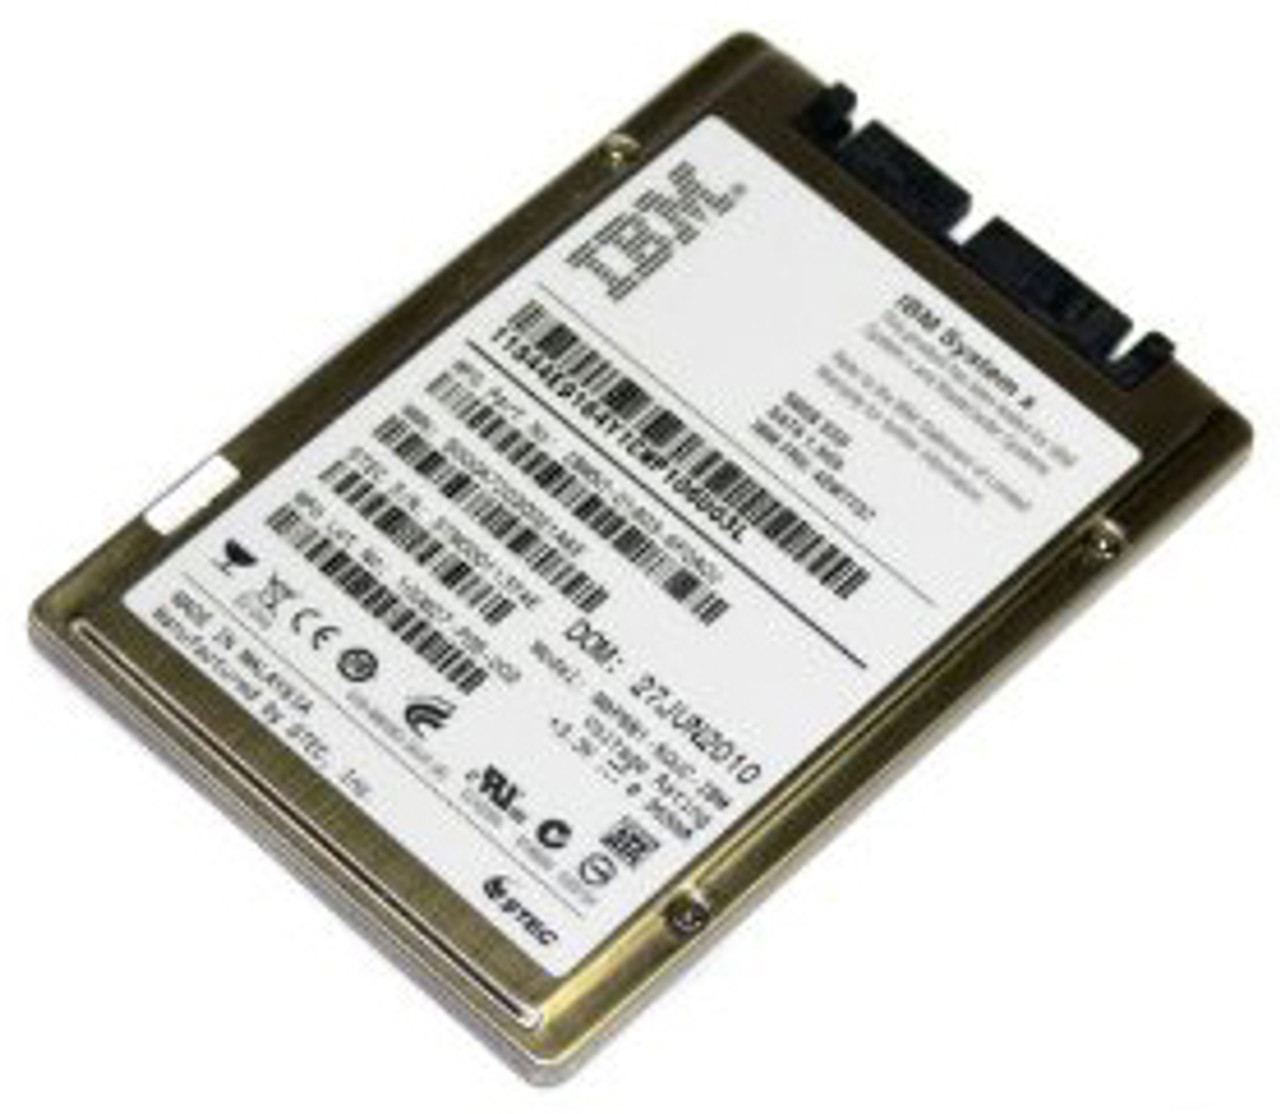 49Y6146 IBM 200GB MLC SAS 6Gbps Hot Swap 2.5-inch Internal Solid State Drive (SSD)